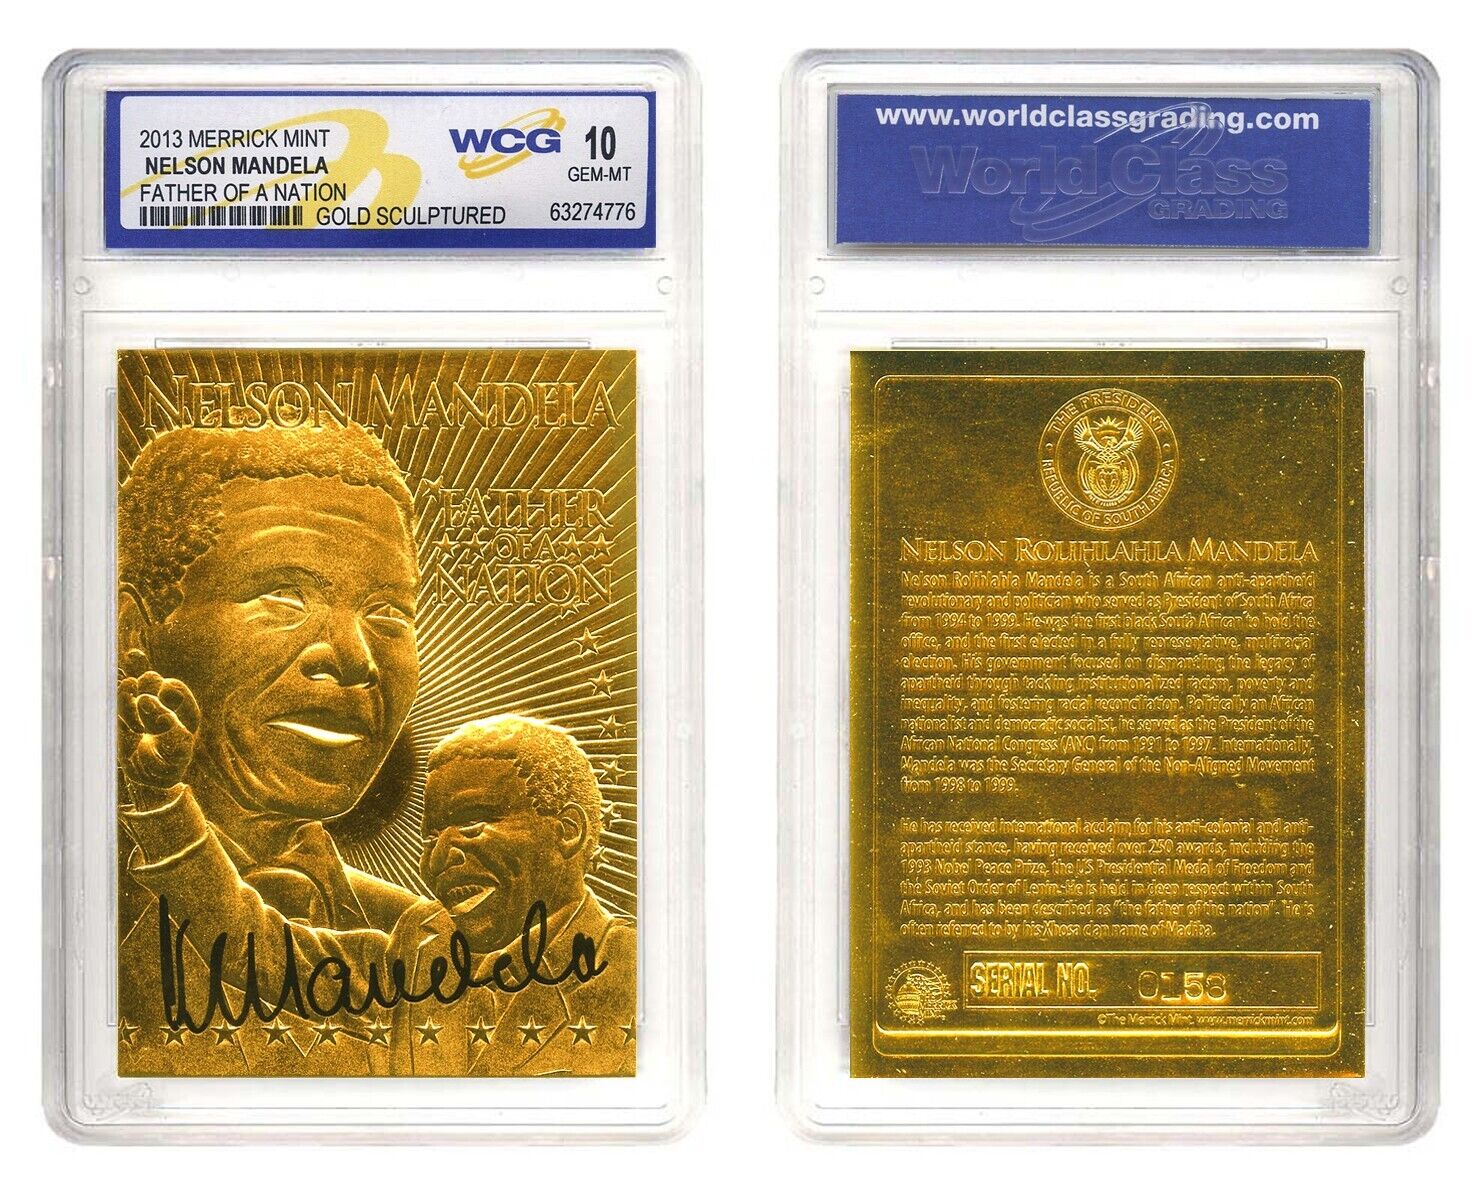 NELSON MANDELA Father of a Nation 23K GOLD Embossed Signature Card - GEM-MINT 10